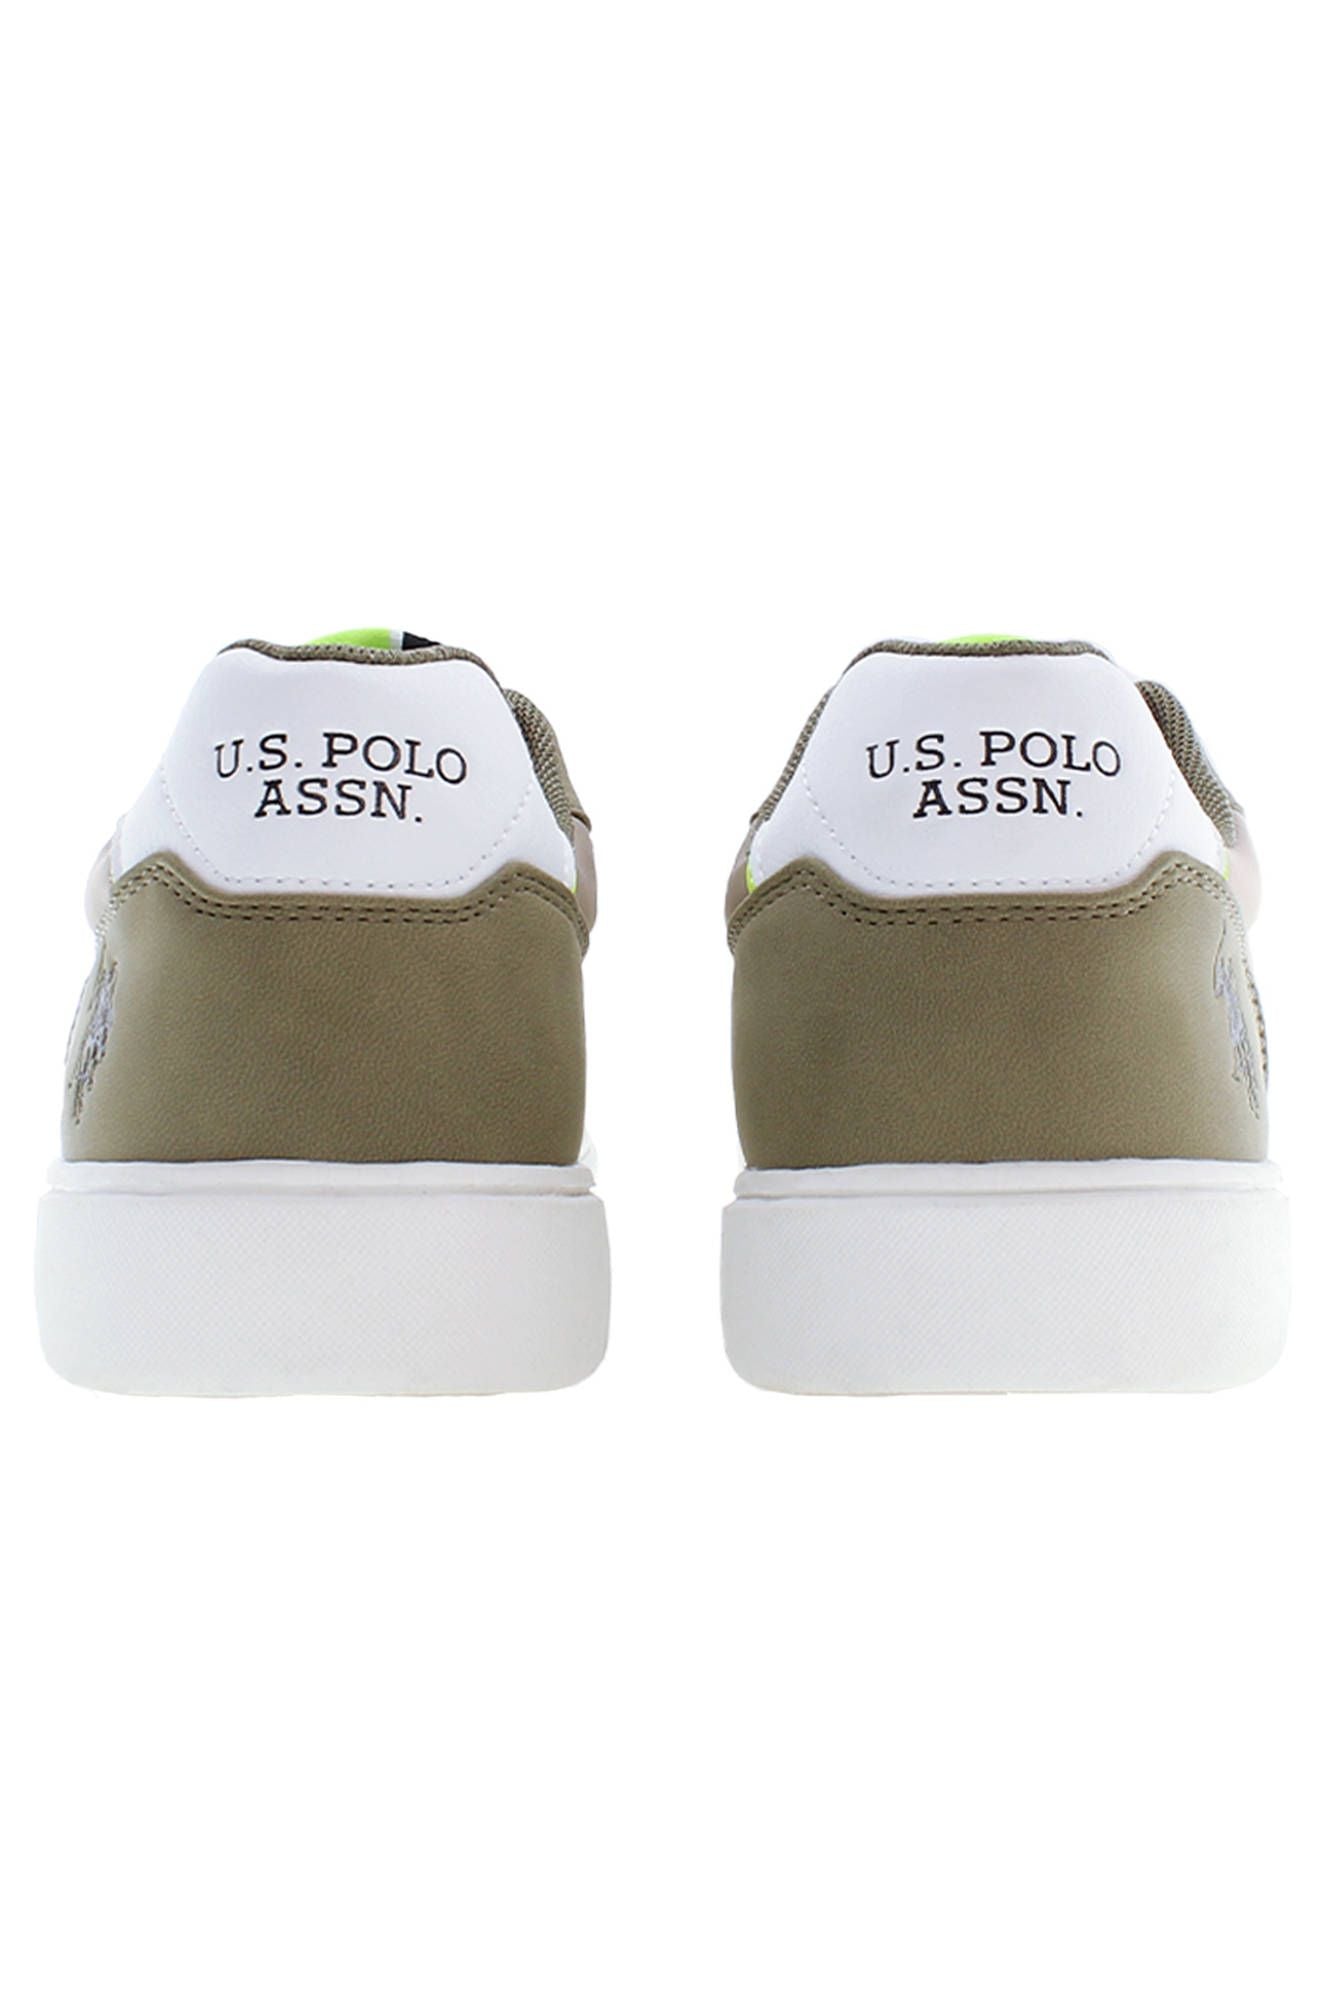 U.S. POLO ASSN. Sleek Green Sports Sneakers With Logo Detail